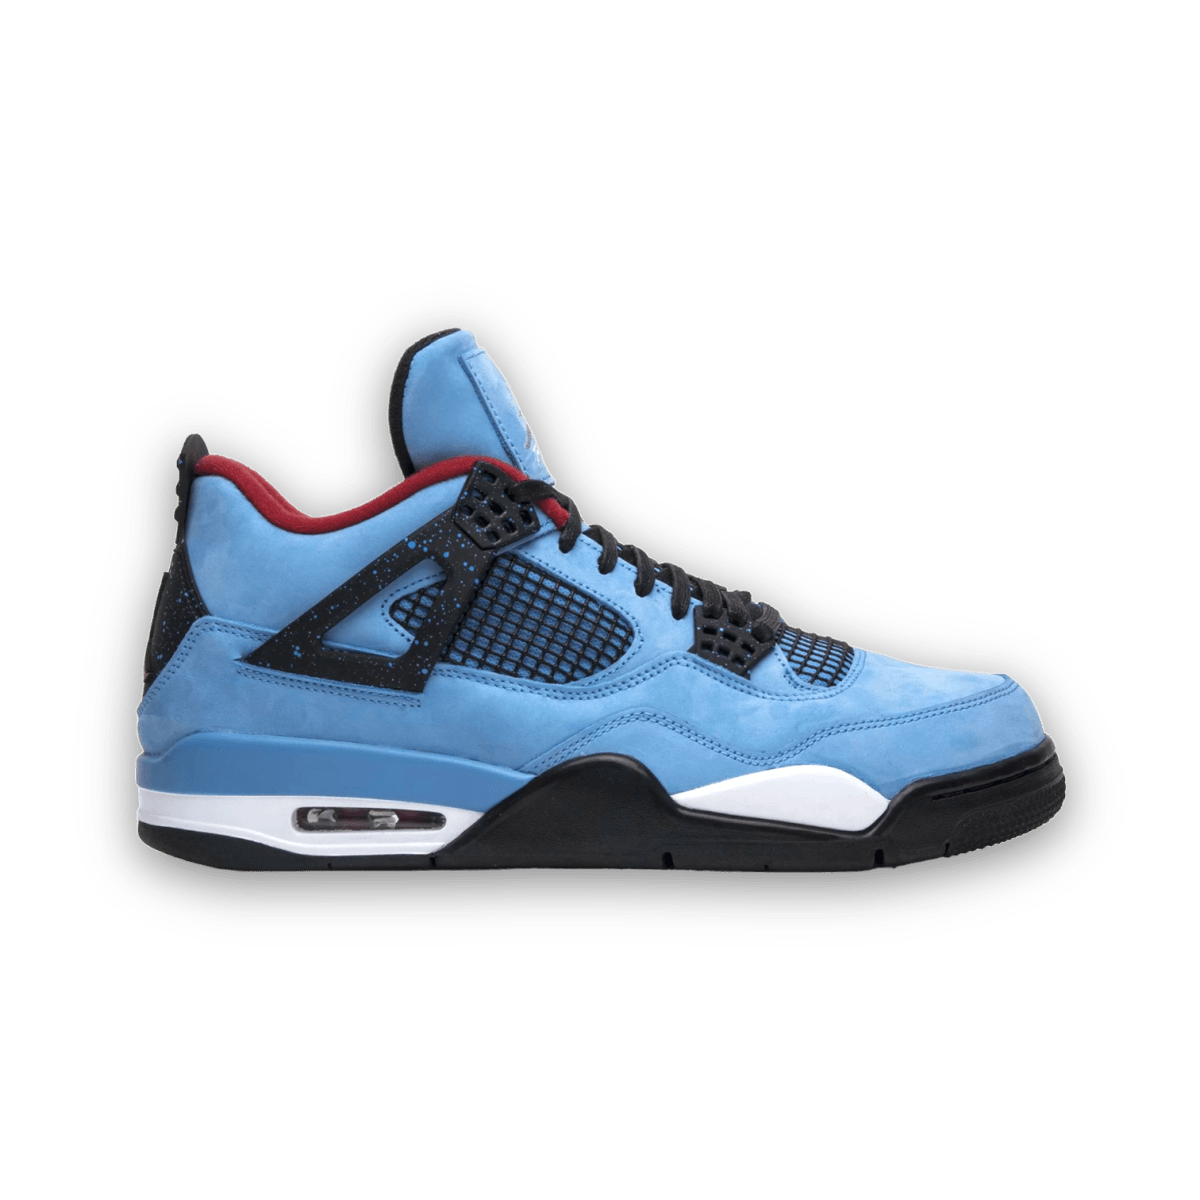 Air Jordan 4 Retro x Travis Scott 'Cactus Jack' - Mid Sneaker - Jawns on Fire Sneakers & Streetwear